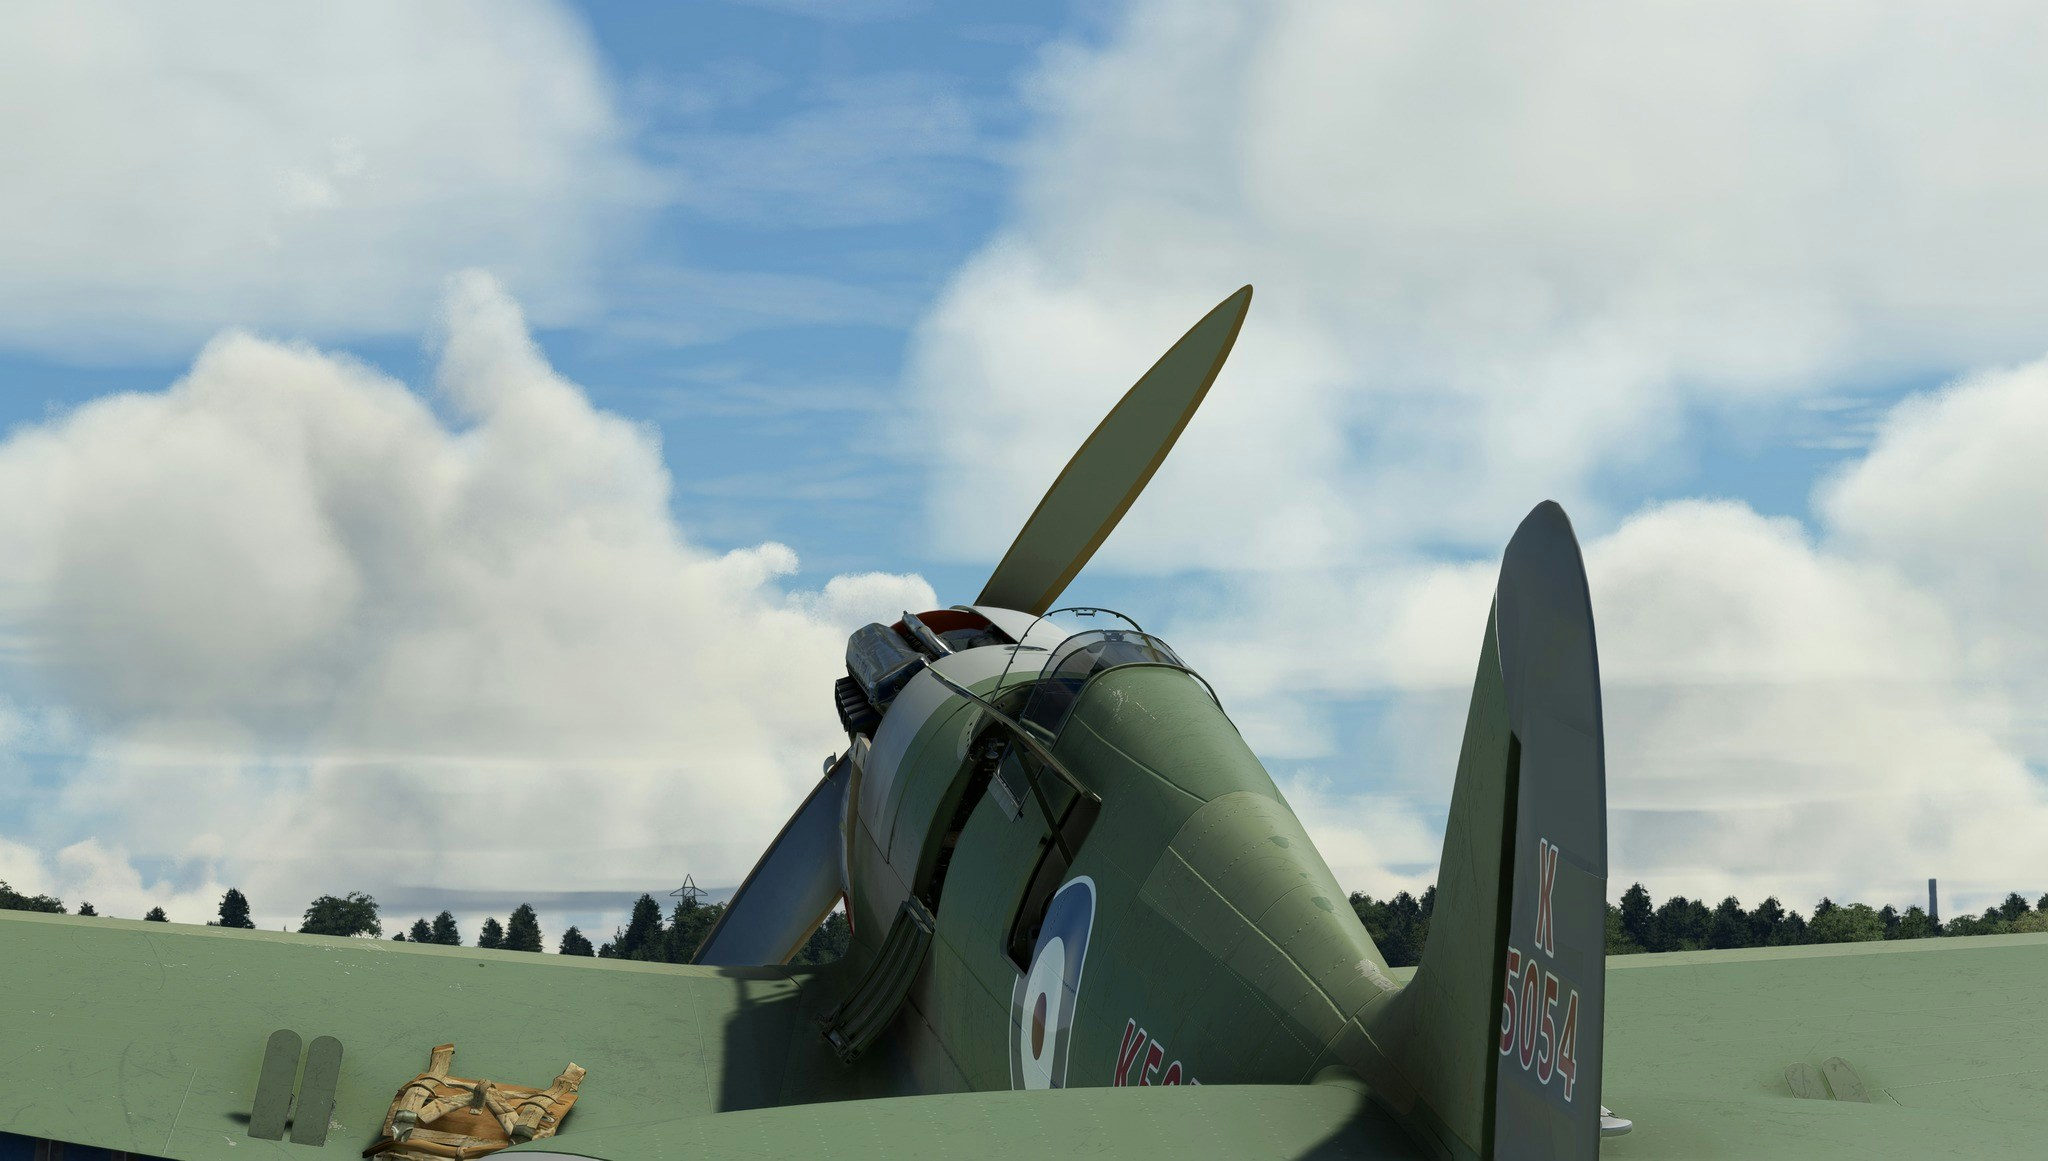 Aeroplane Heaven Announces Spitfire Prototype, Previews Hawker Hurricane